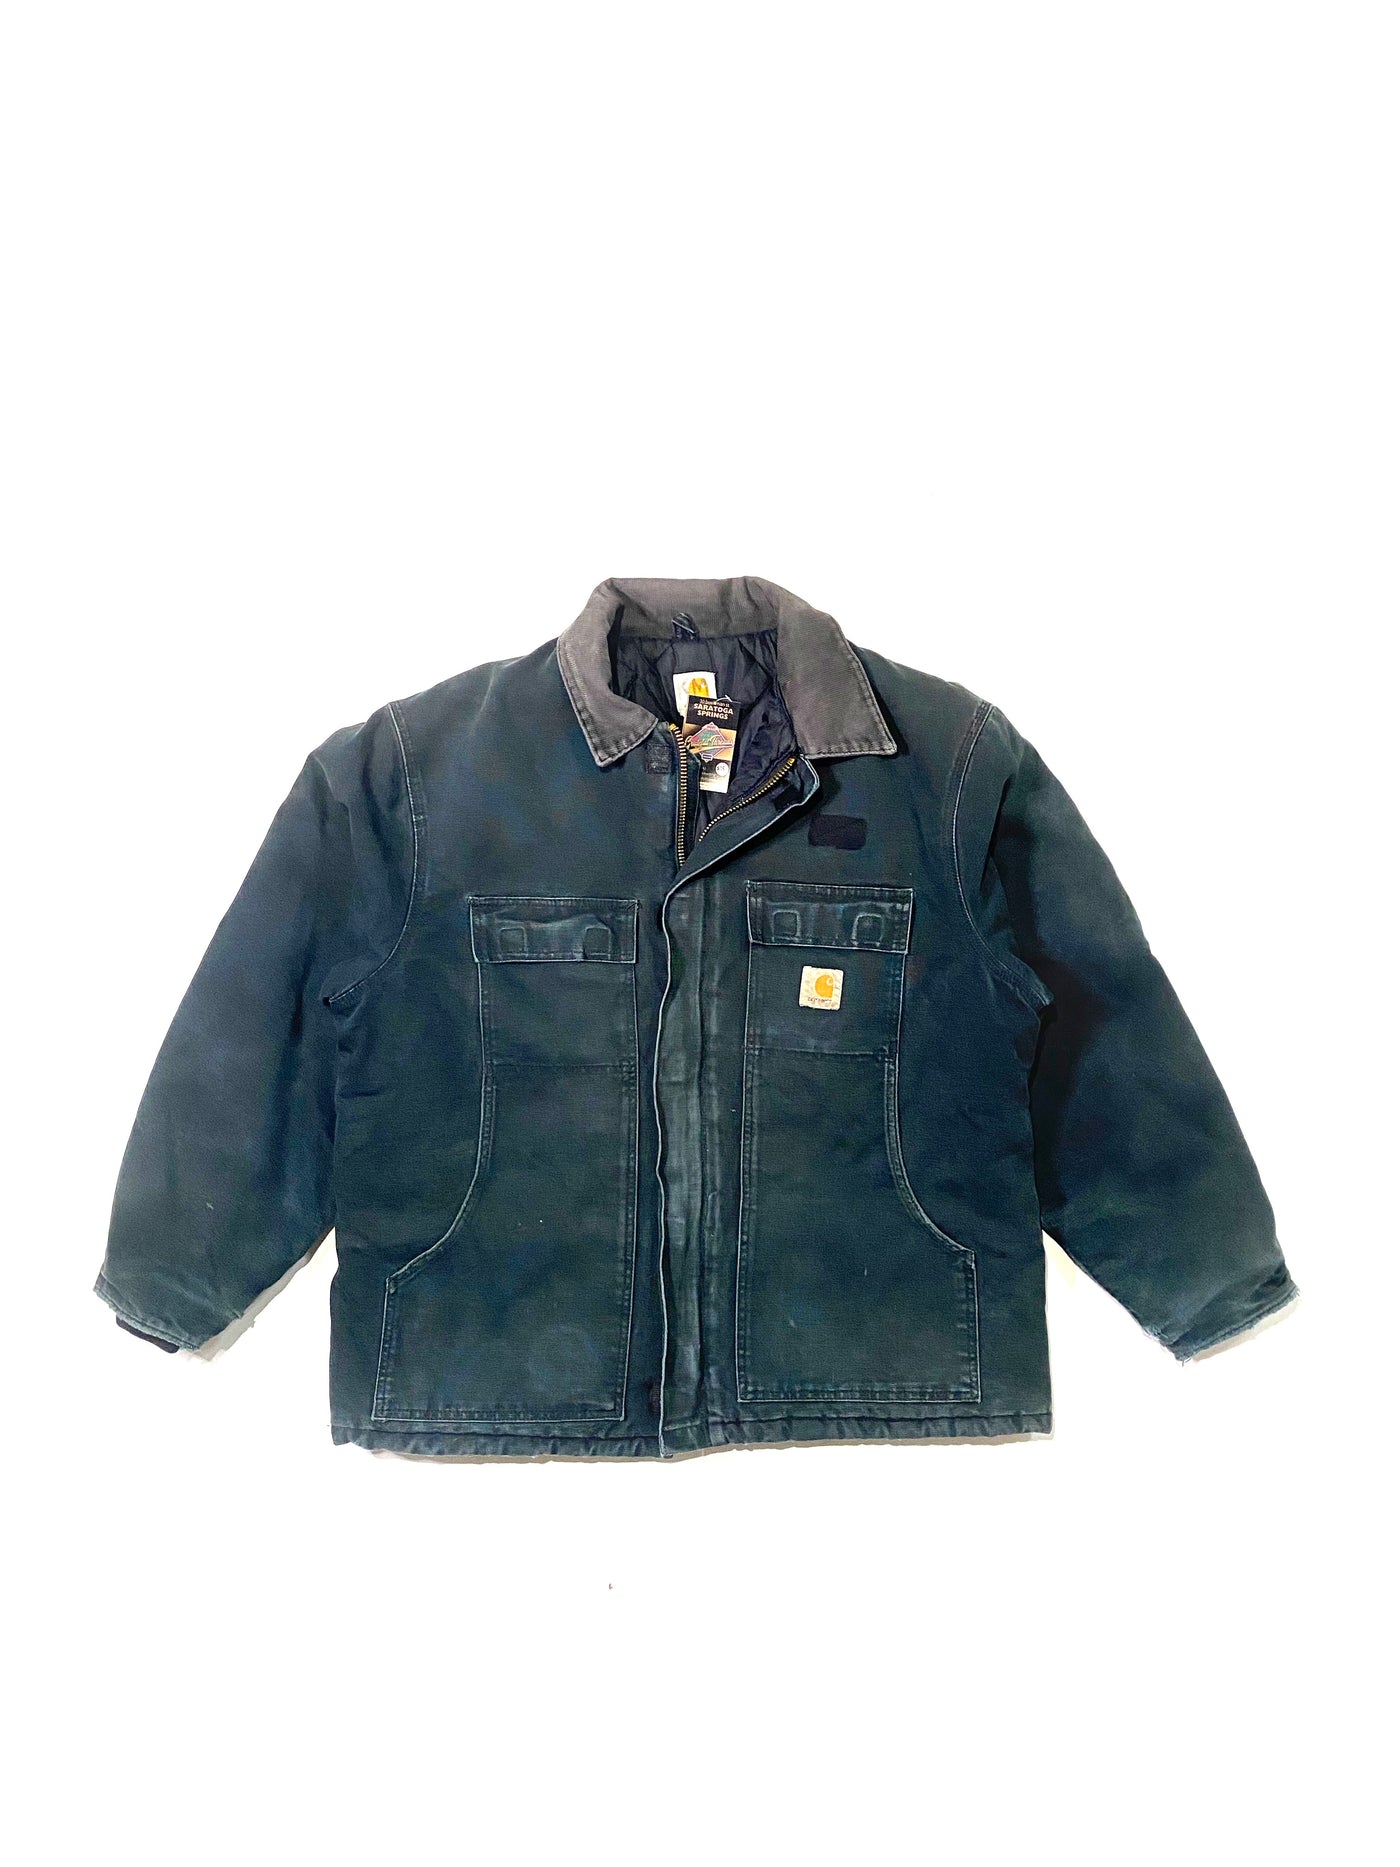 Vintage Carhartt Distressed Work Jacket